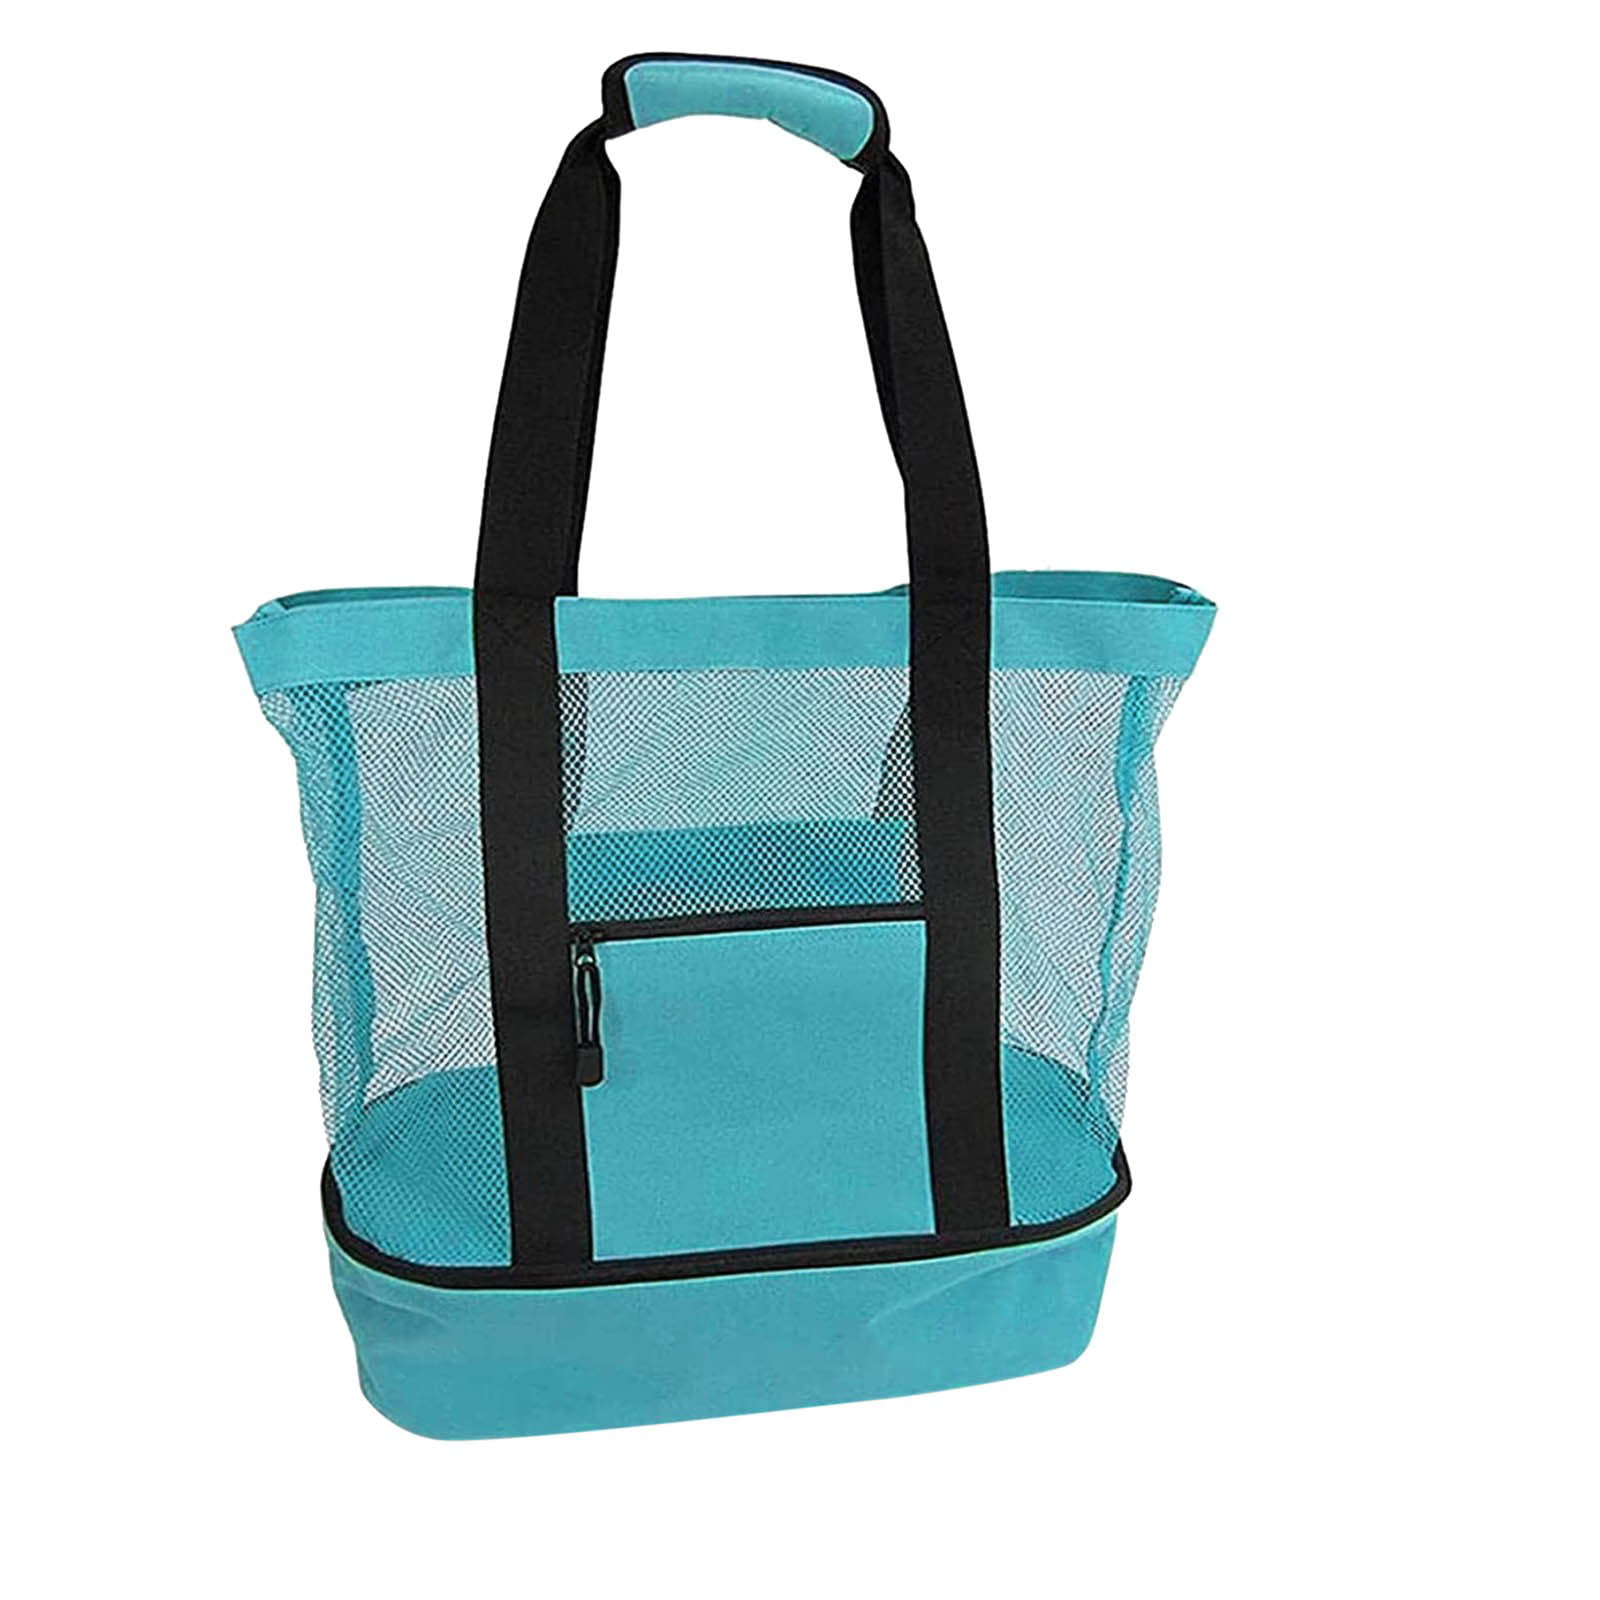 UK Large Lunch Bag Outdoor Camping Picnic Shoulder Tote Handbag Insulated Cooler 